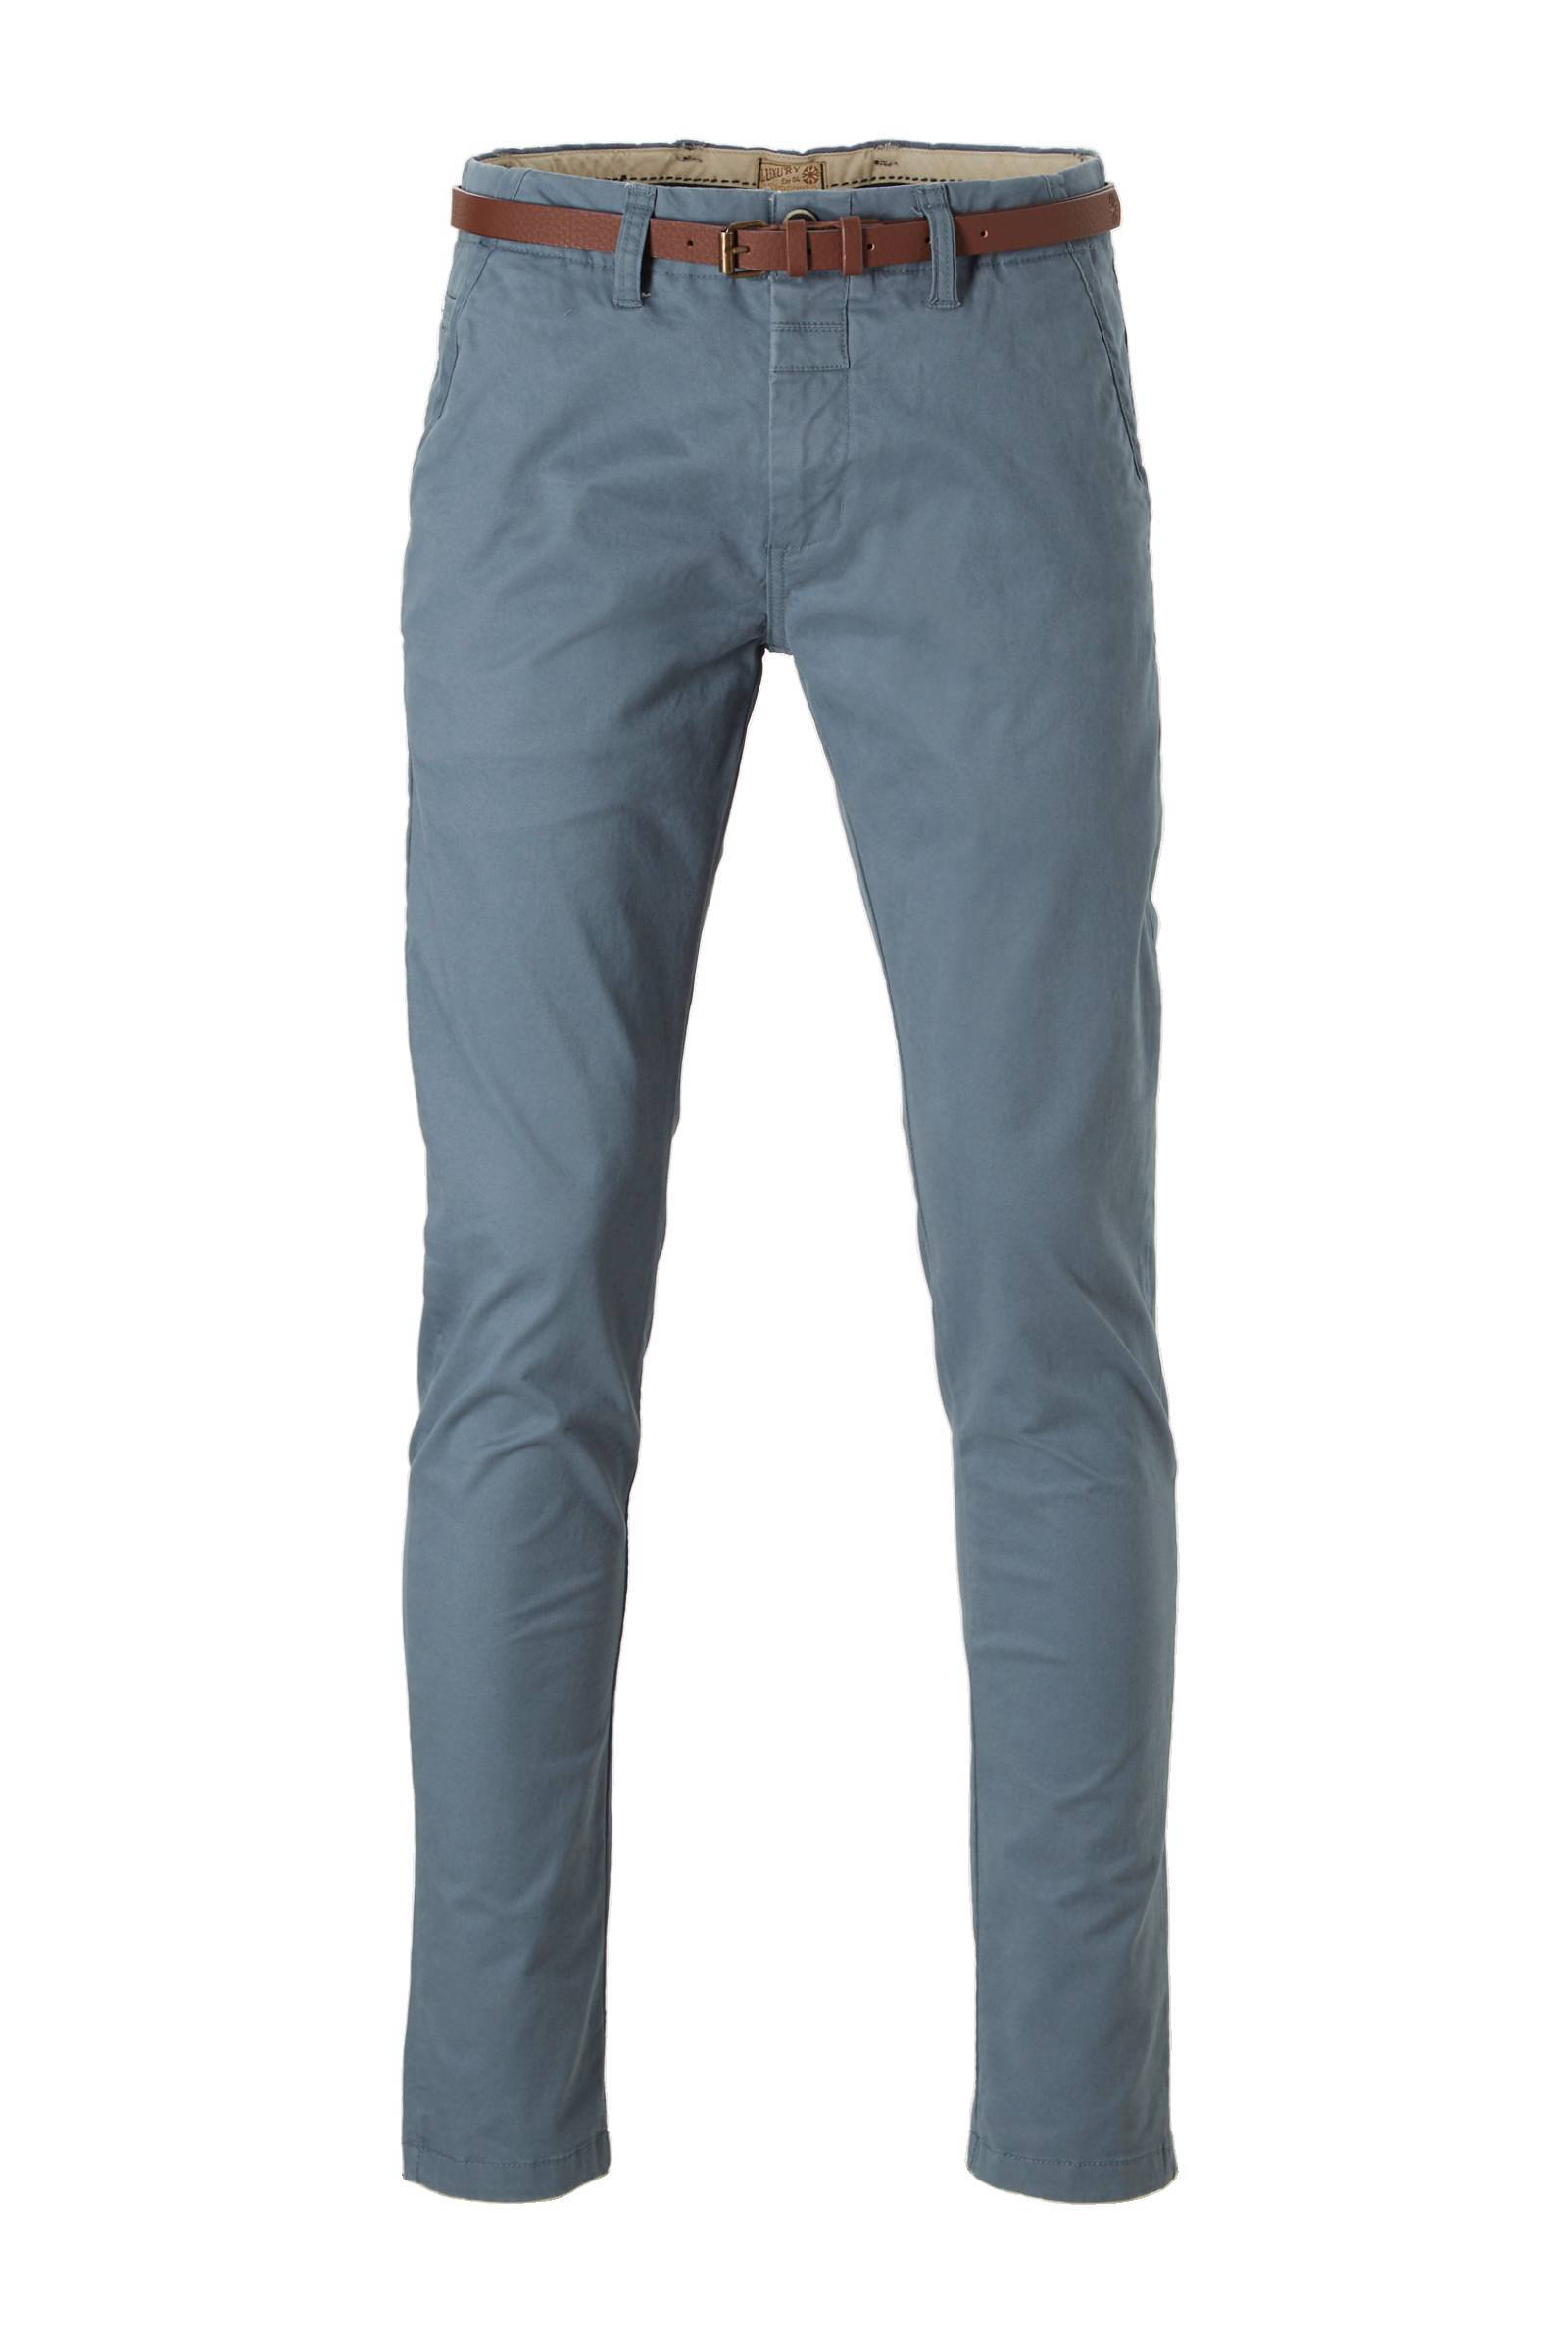 Chino pants belt Stretch Twil 501146-Nos/820 online kopen